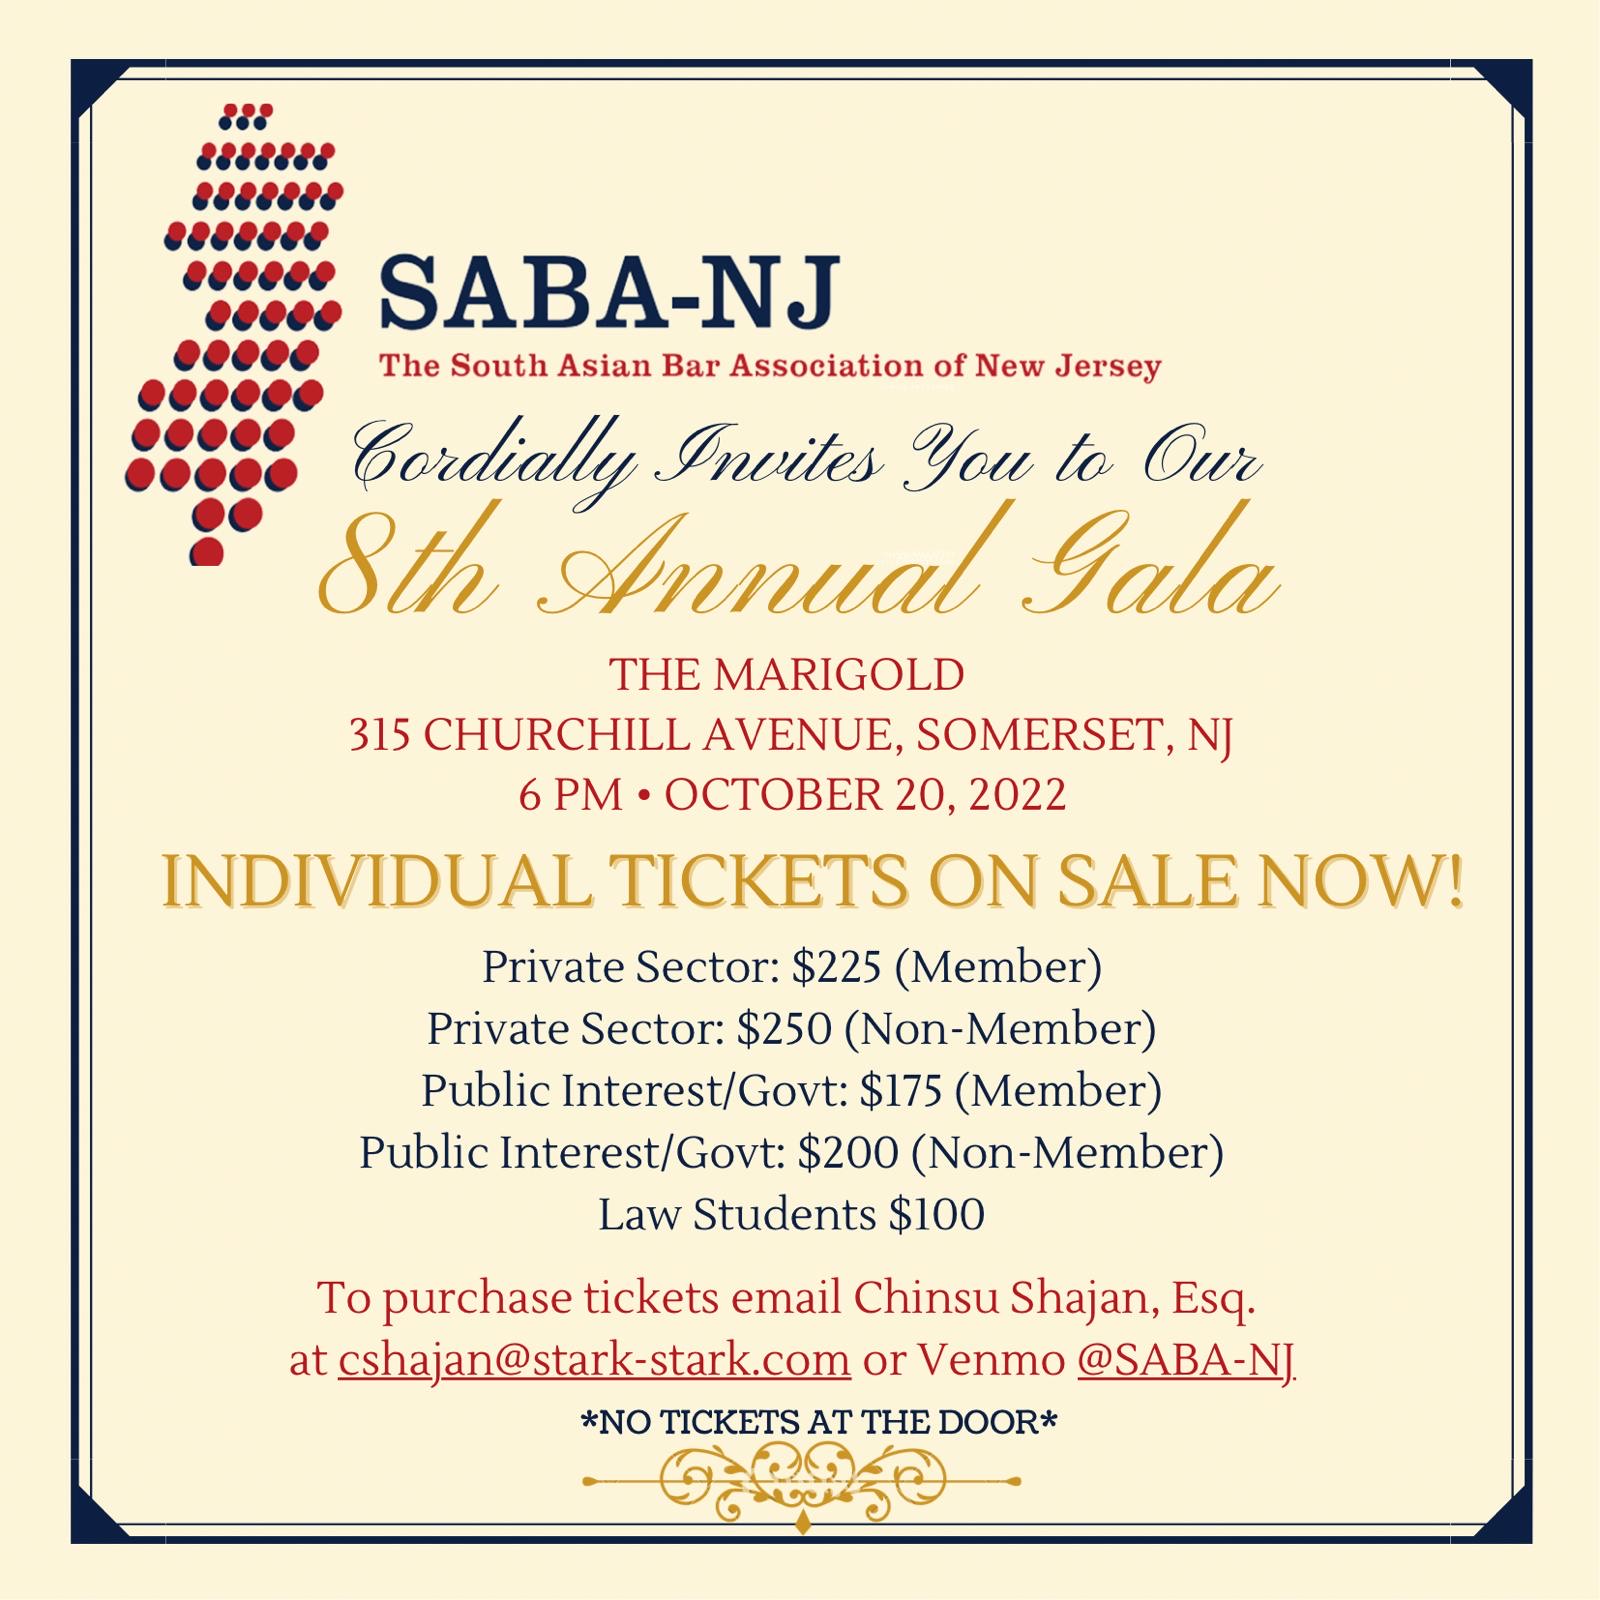 8th Annual Gala Ticketing Information